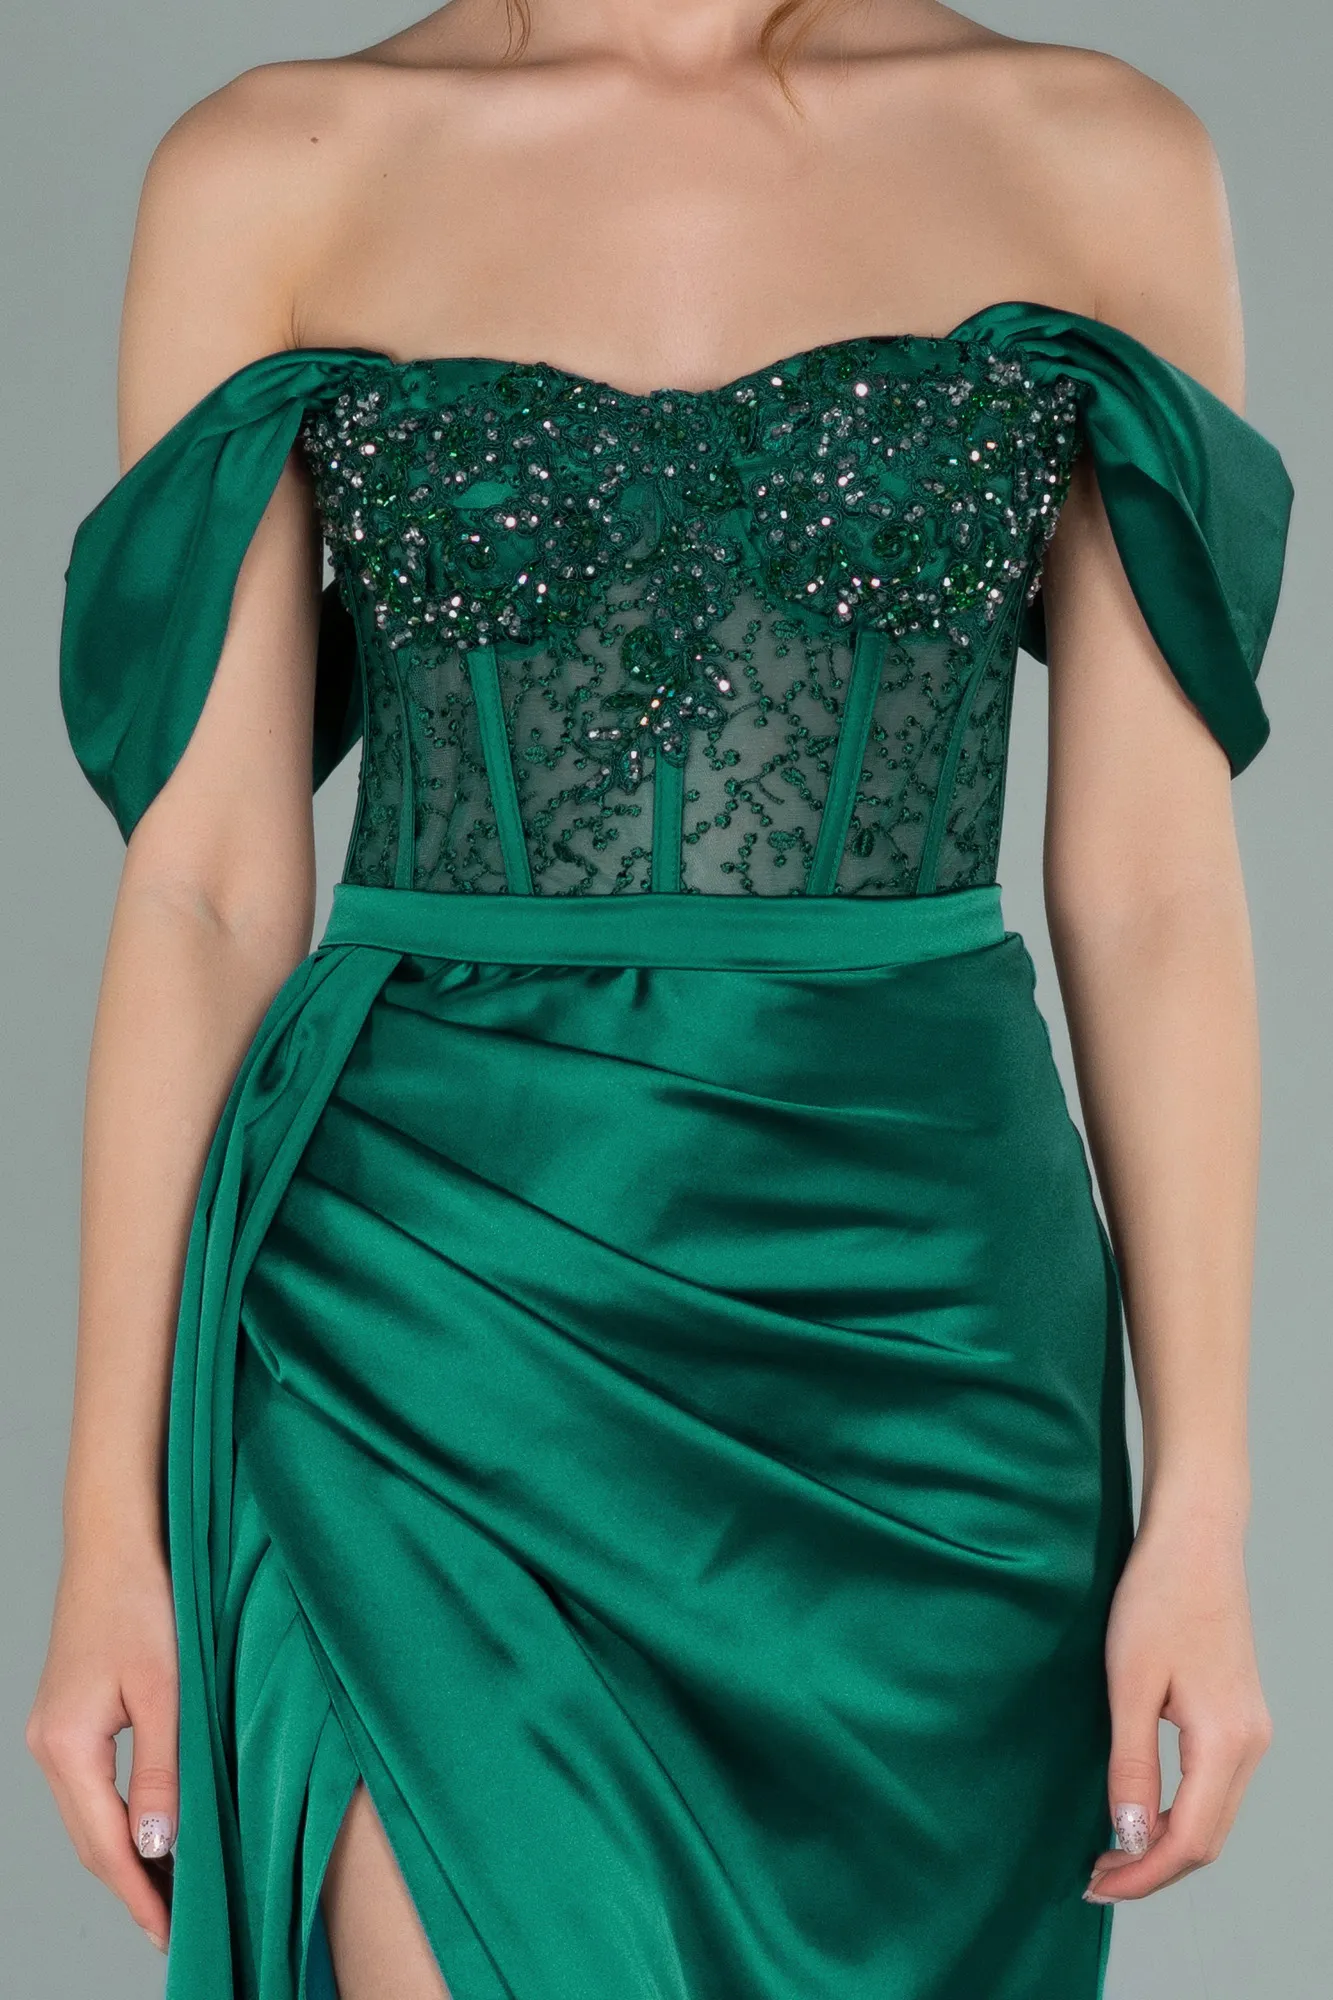 Emerald Green-Long Satin Plus Size Evening Dress ABU3236